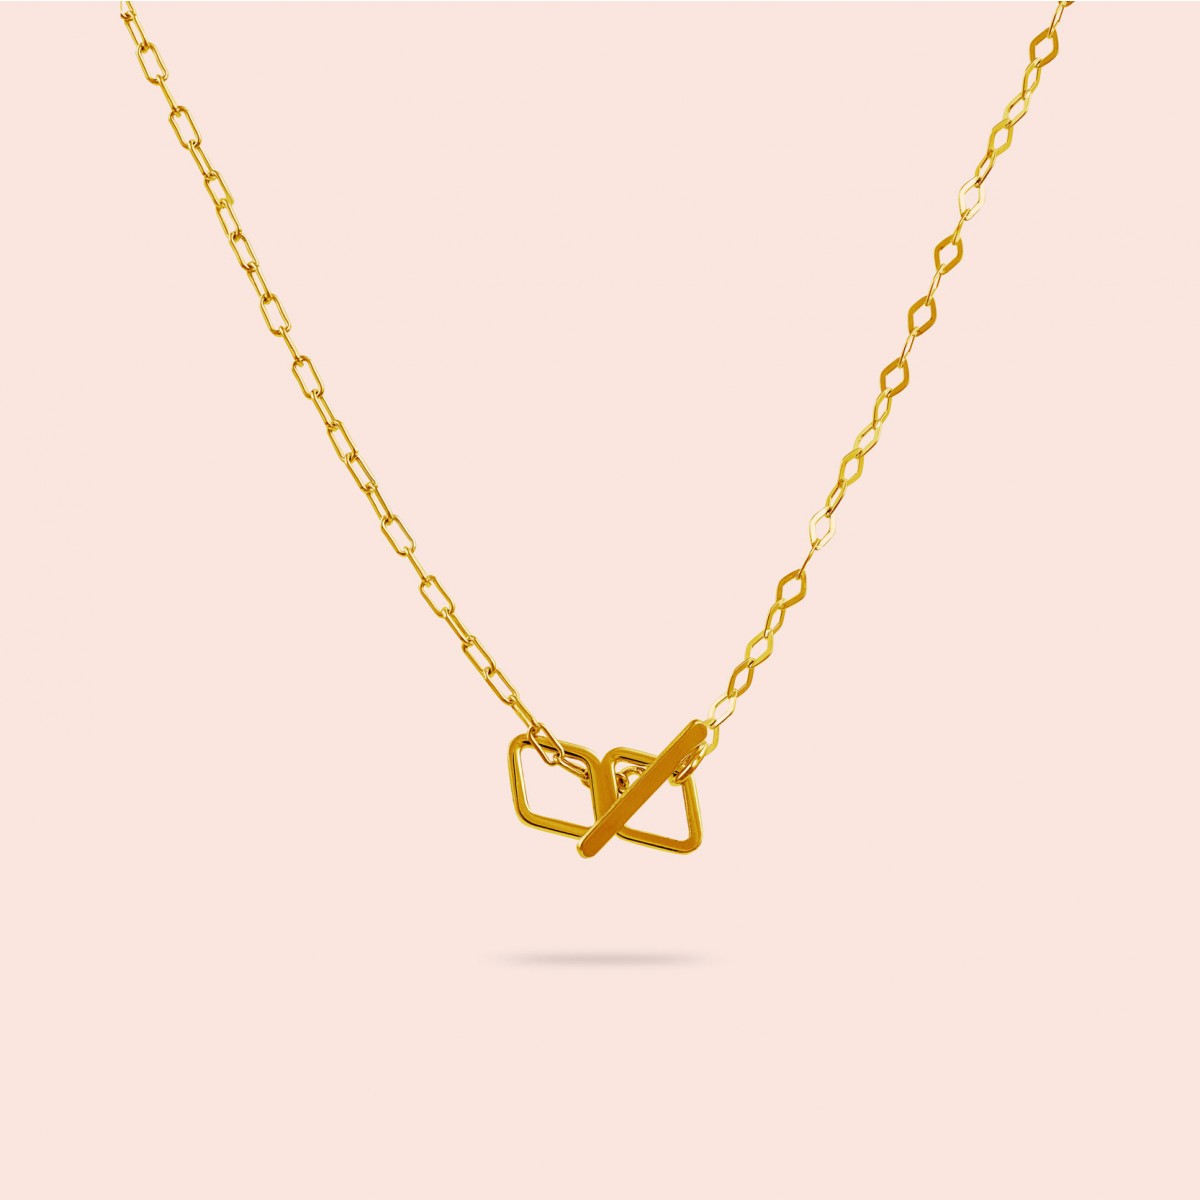 related by objects - just diamonds extended necklace - 925 Sterlingsilber 18k goldplattiert